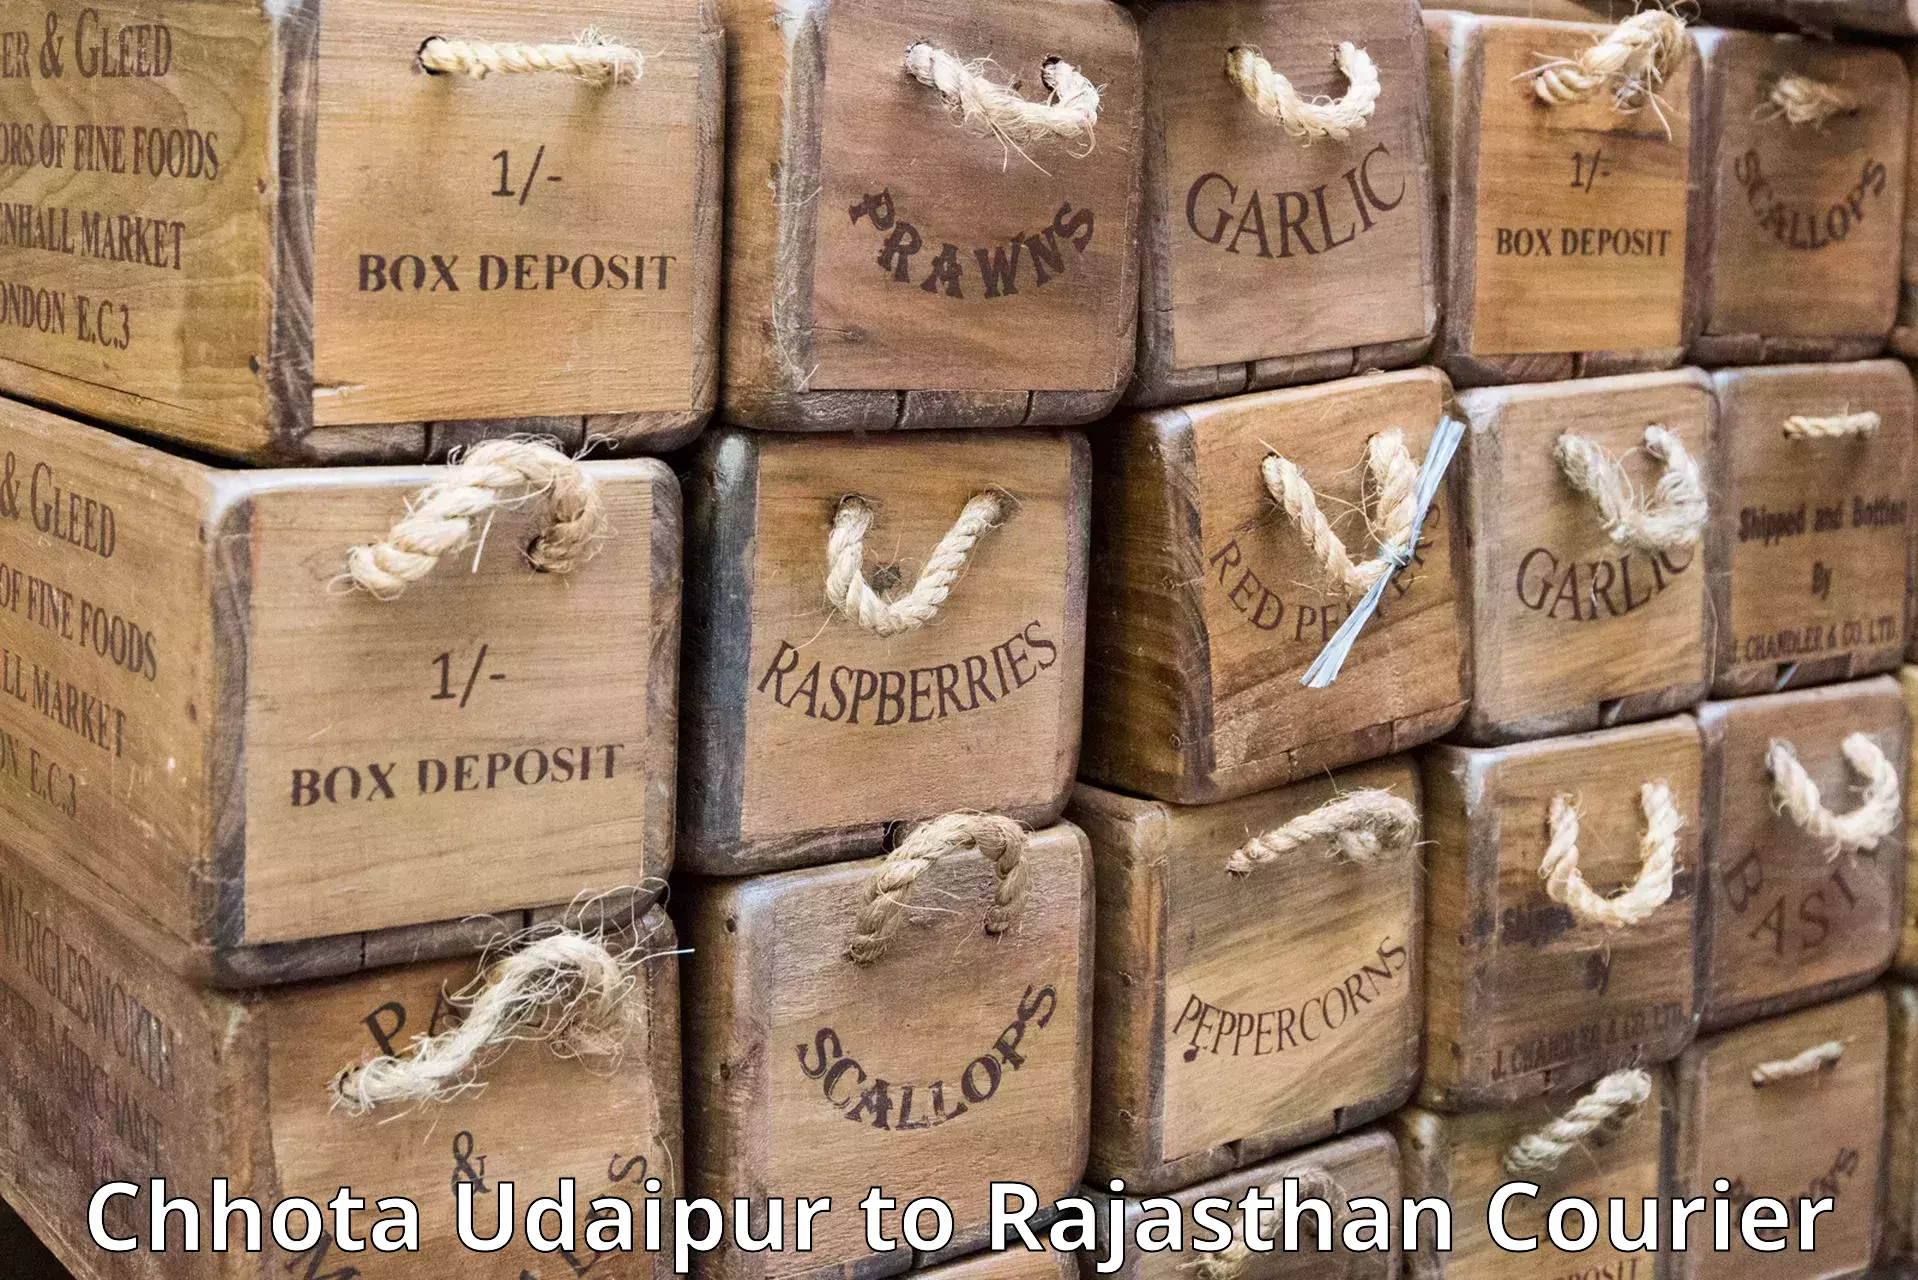 Logistics service provider Chhota Udaipur to Didwana